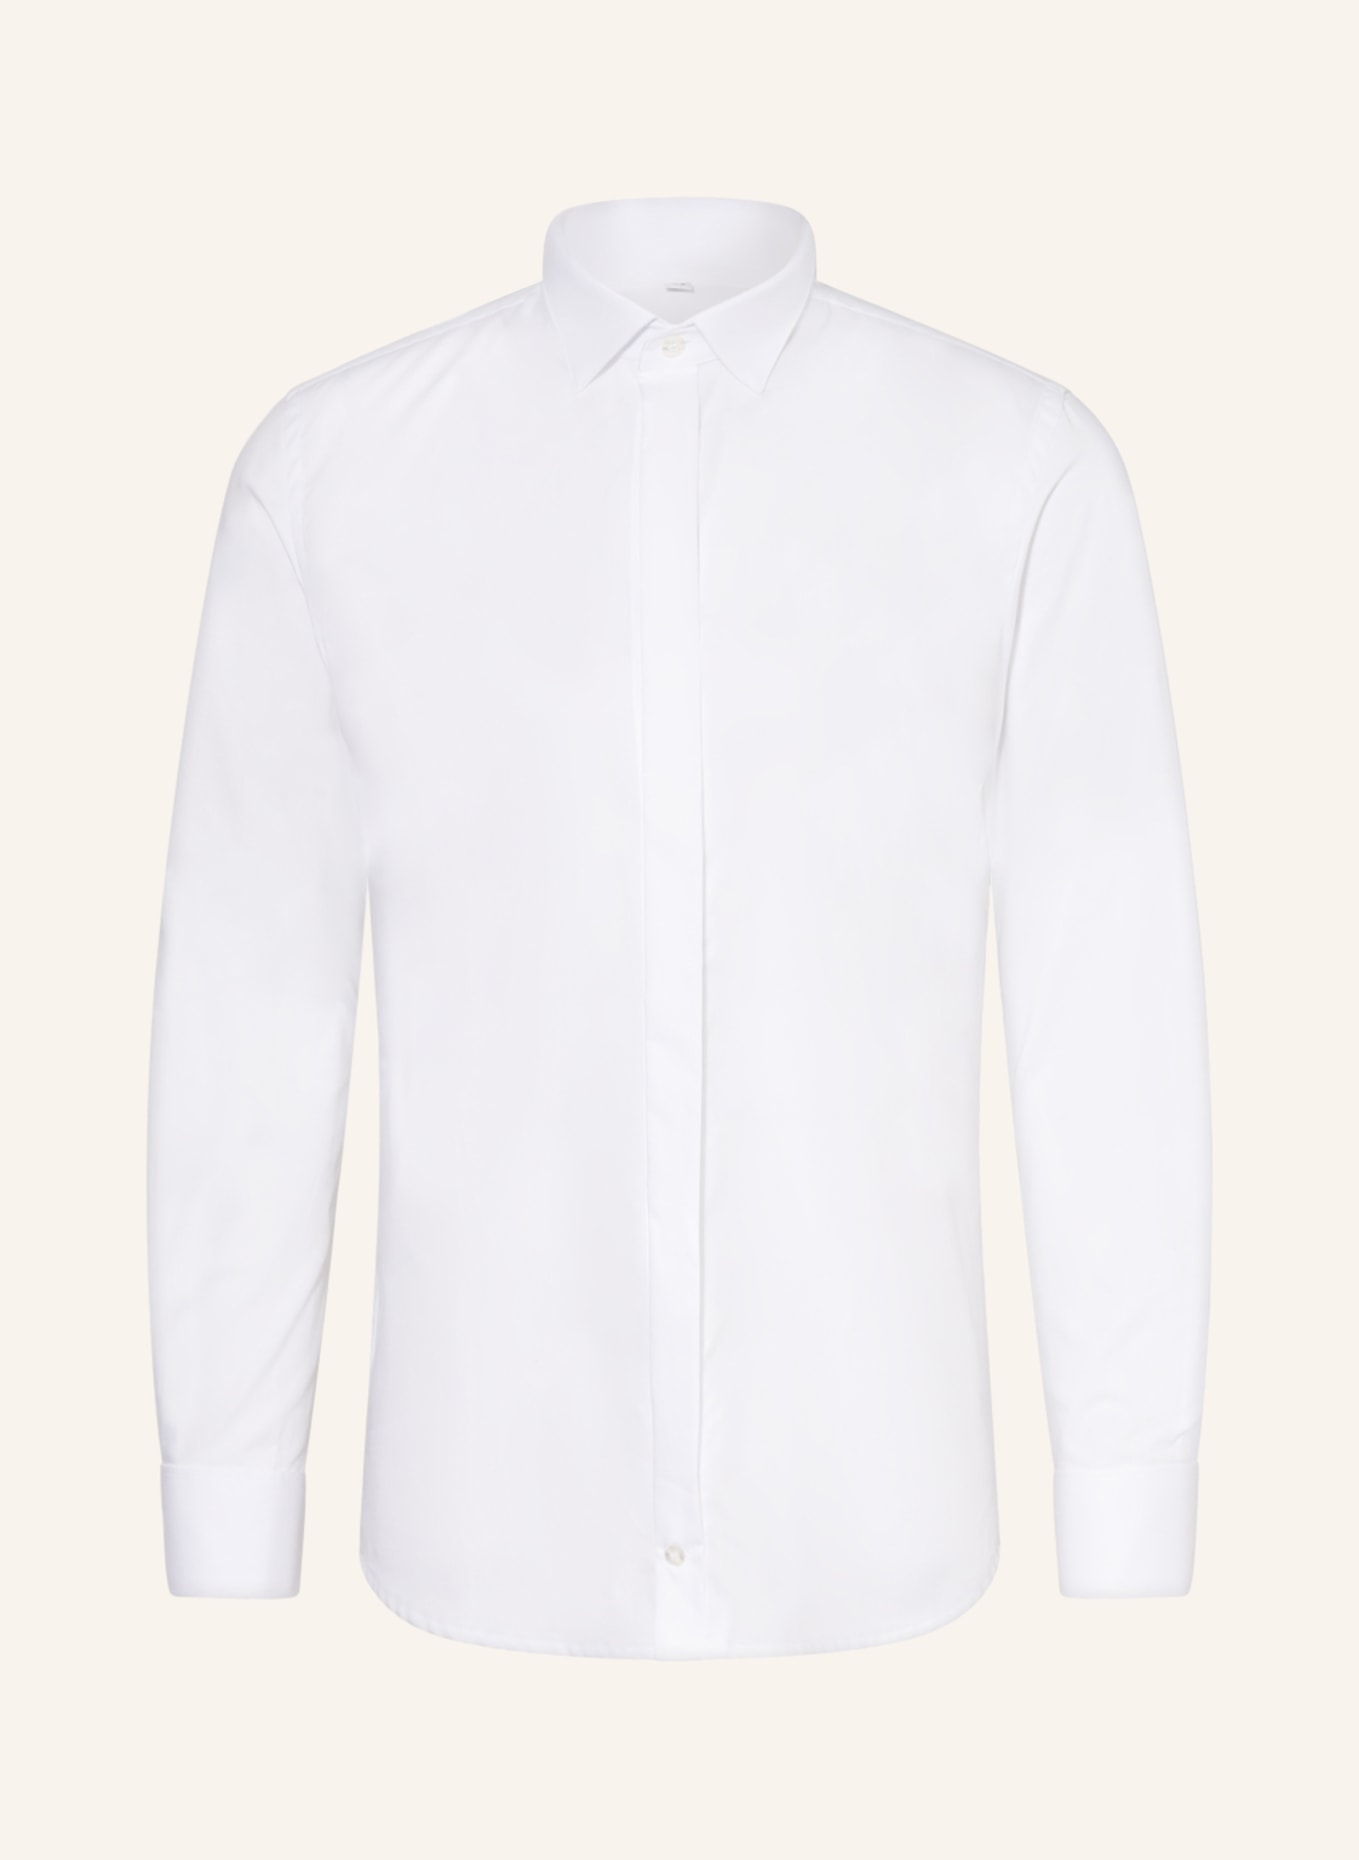 WILVORST Tuxedo shirt body fit , Color: WHITE (Image 1)